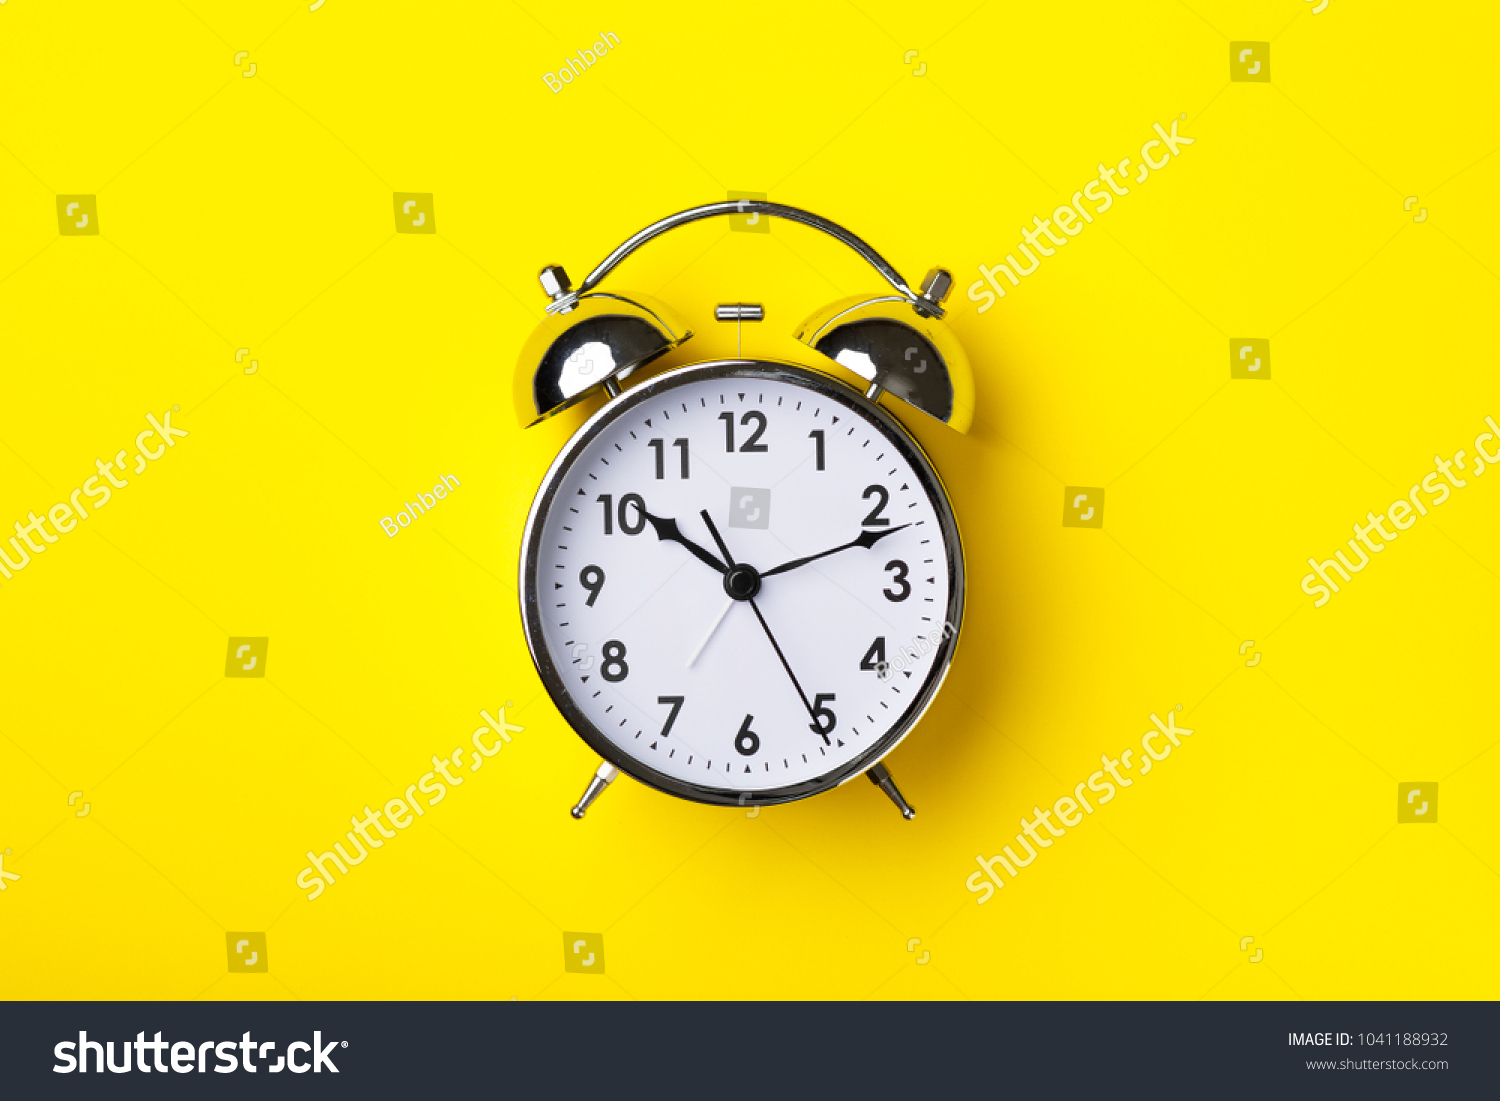 Retro alarm clock on bright yellow background #1041188932